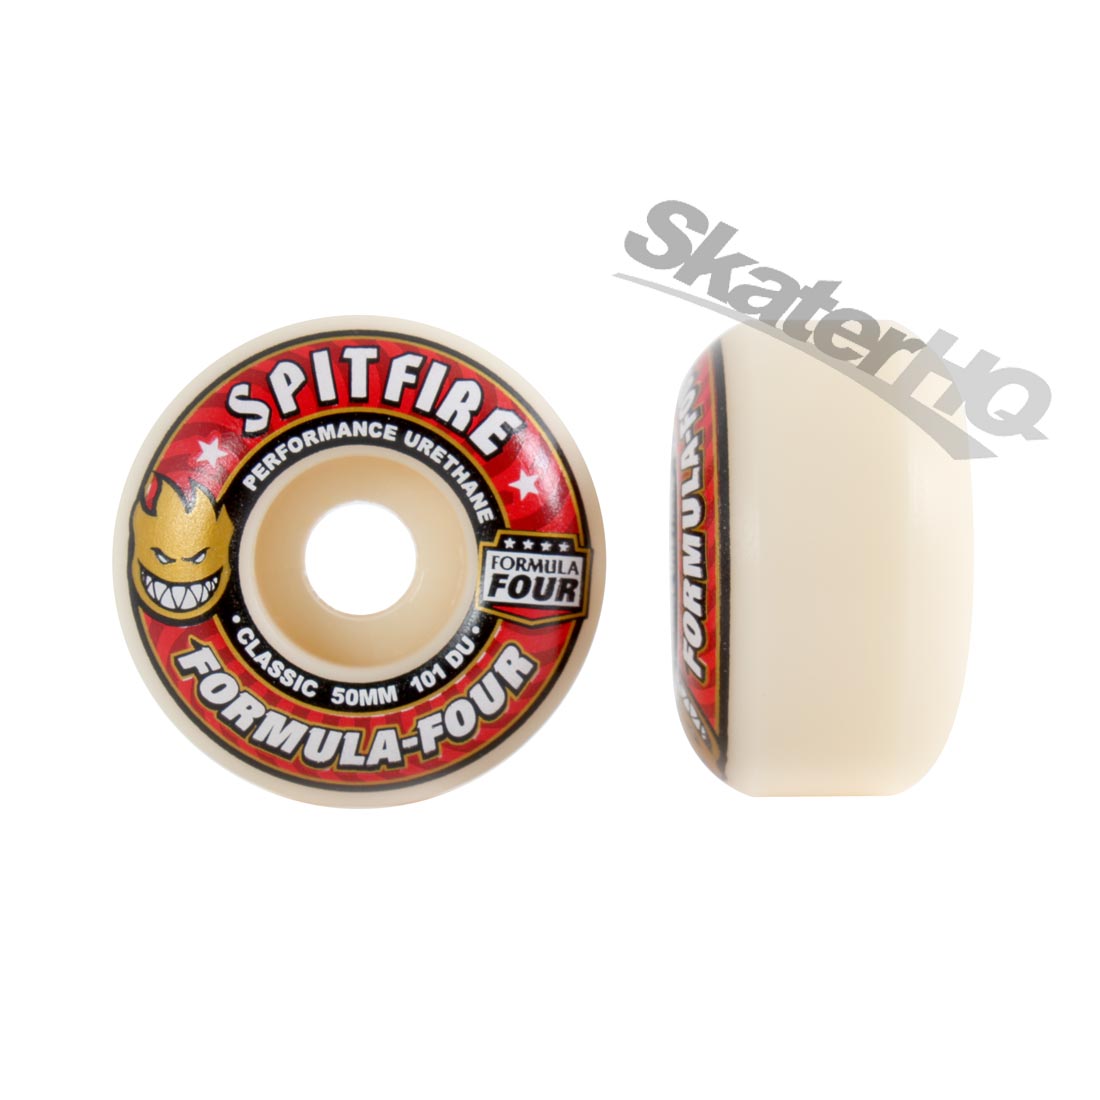 Spitfire Formula Four 101A Classic 50mm Skateboard Wheels